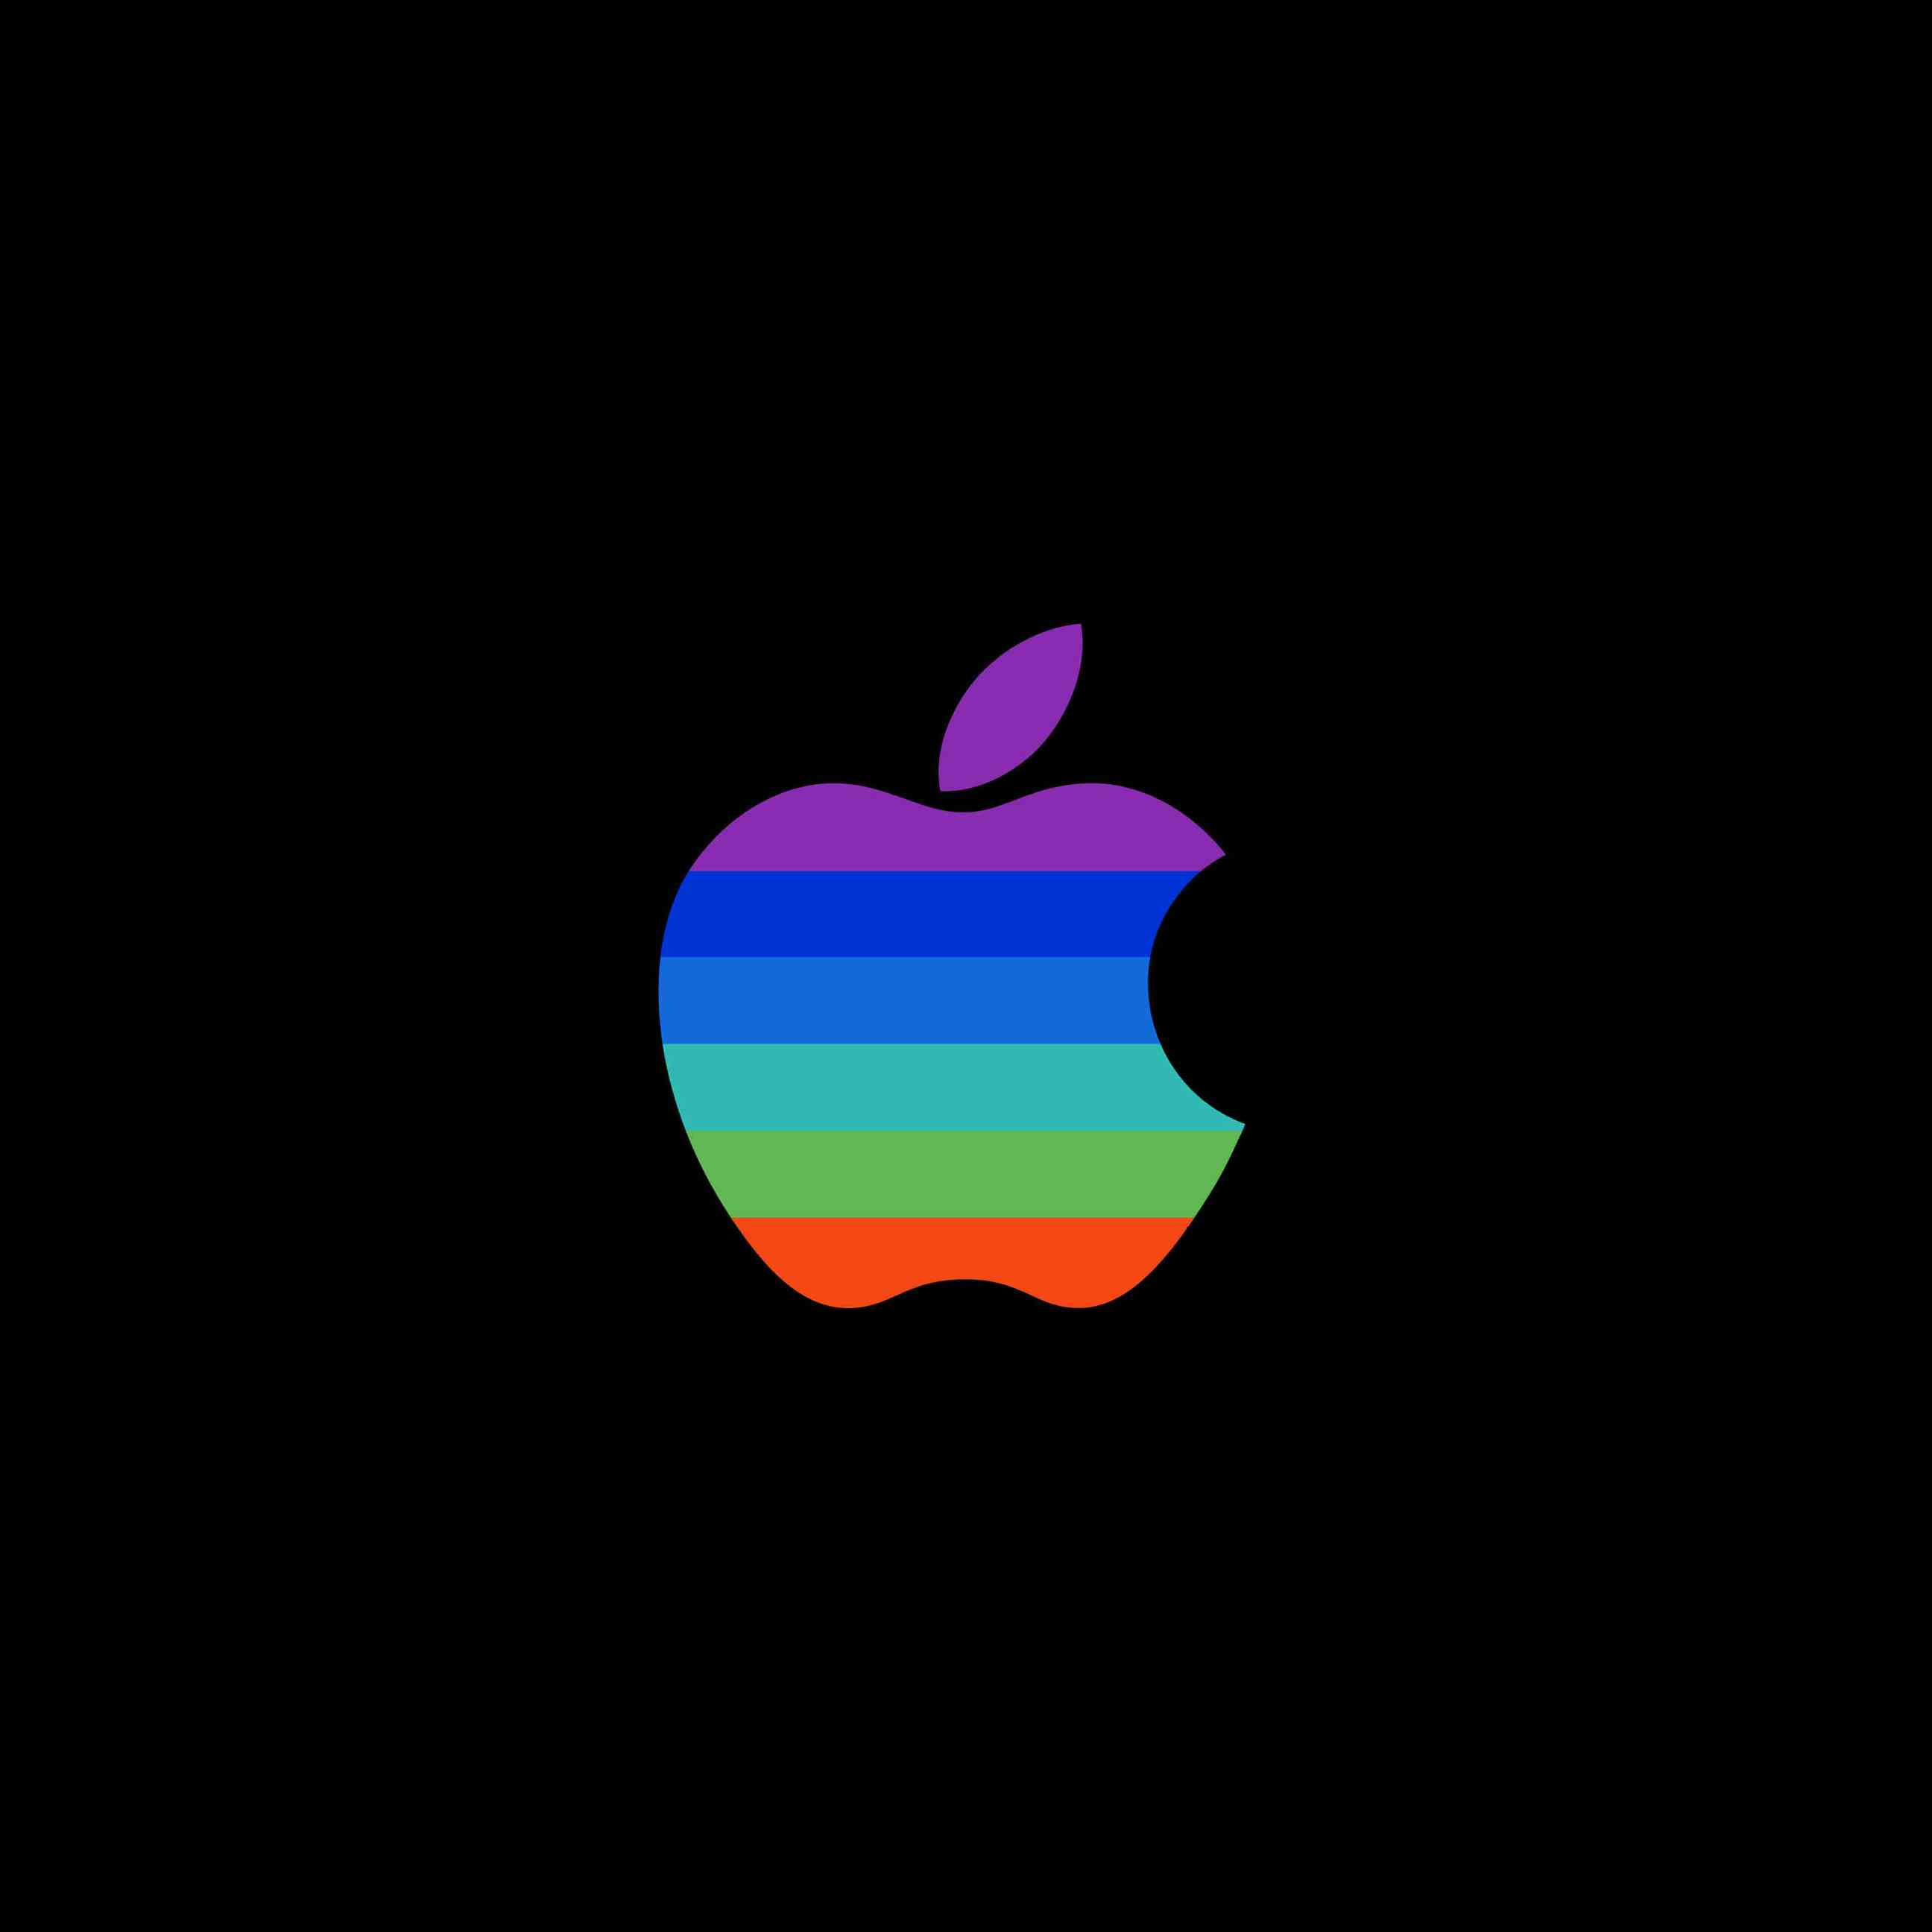 Apple Logo Colorful Black Cool Wallpaper Sc iPad